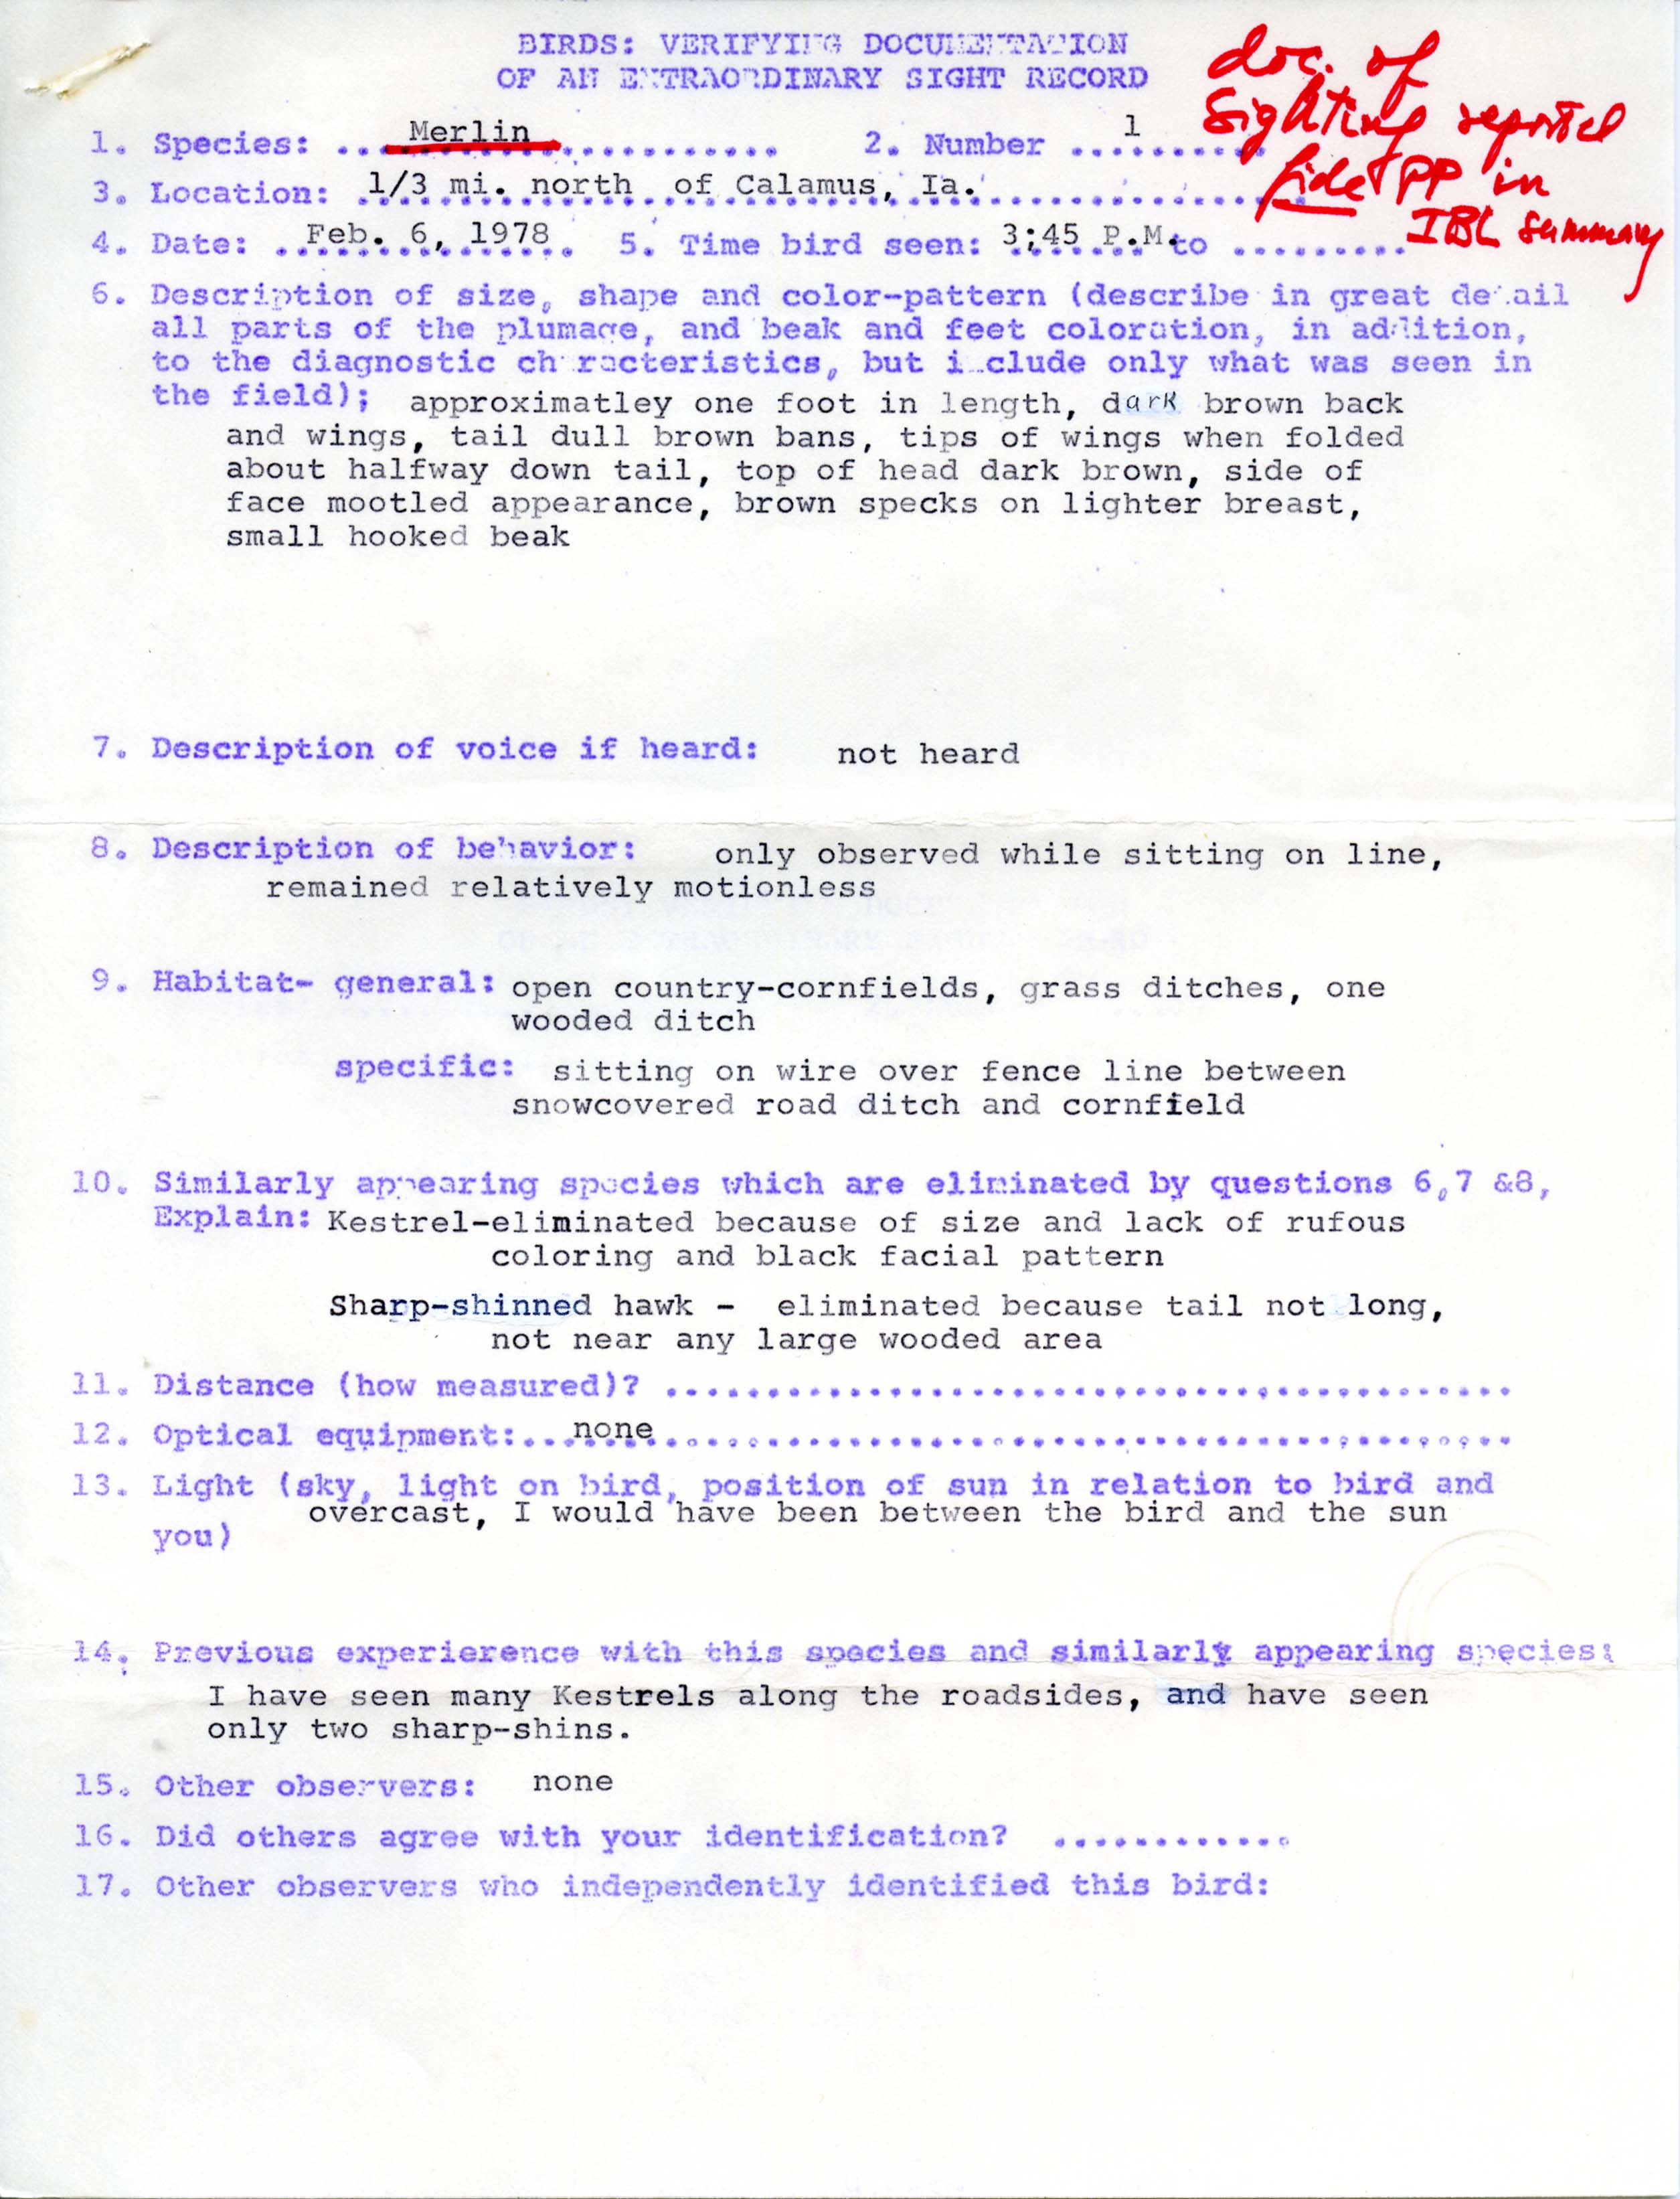 Rare bird documentation for Merlin at Calamus, 1978